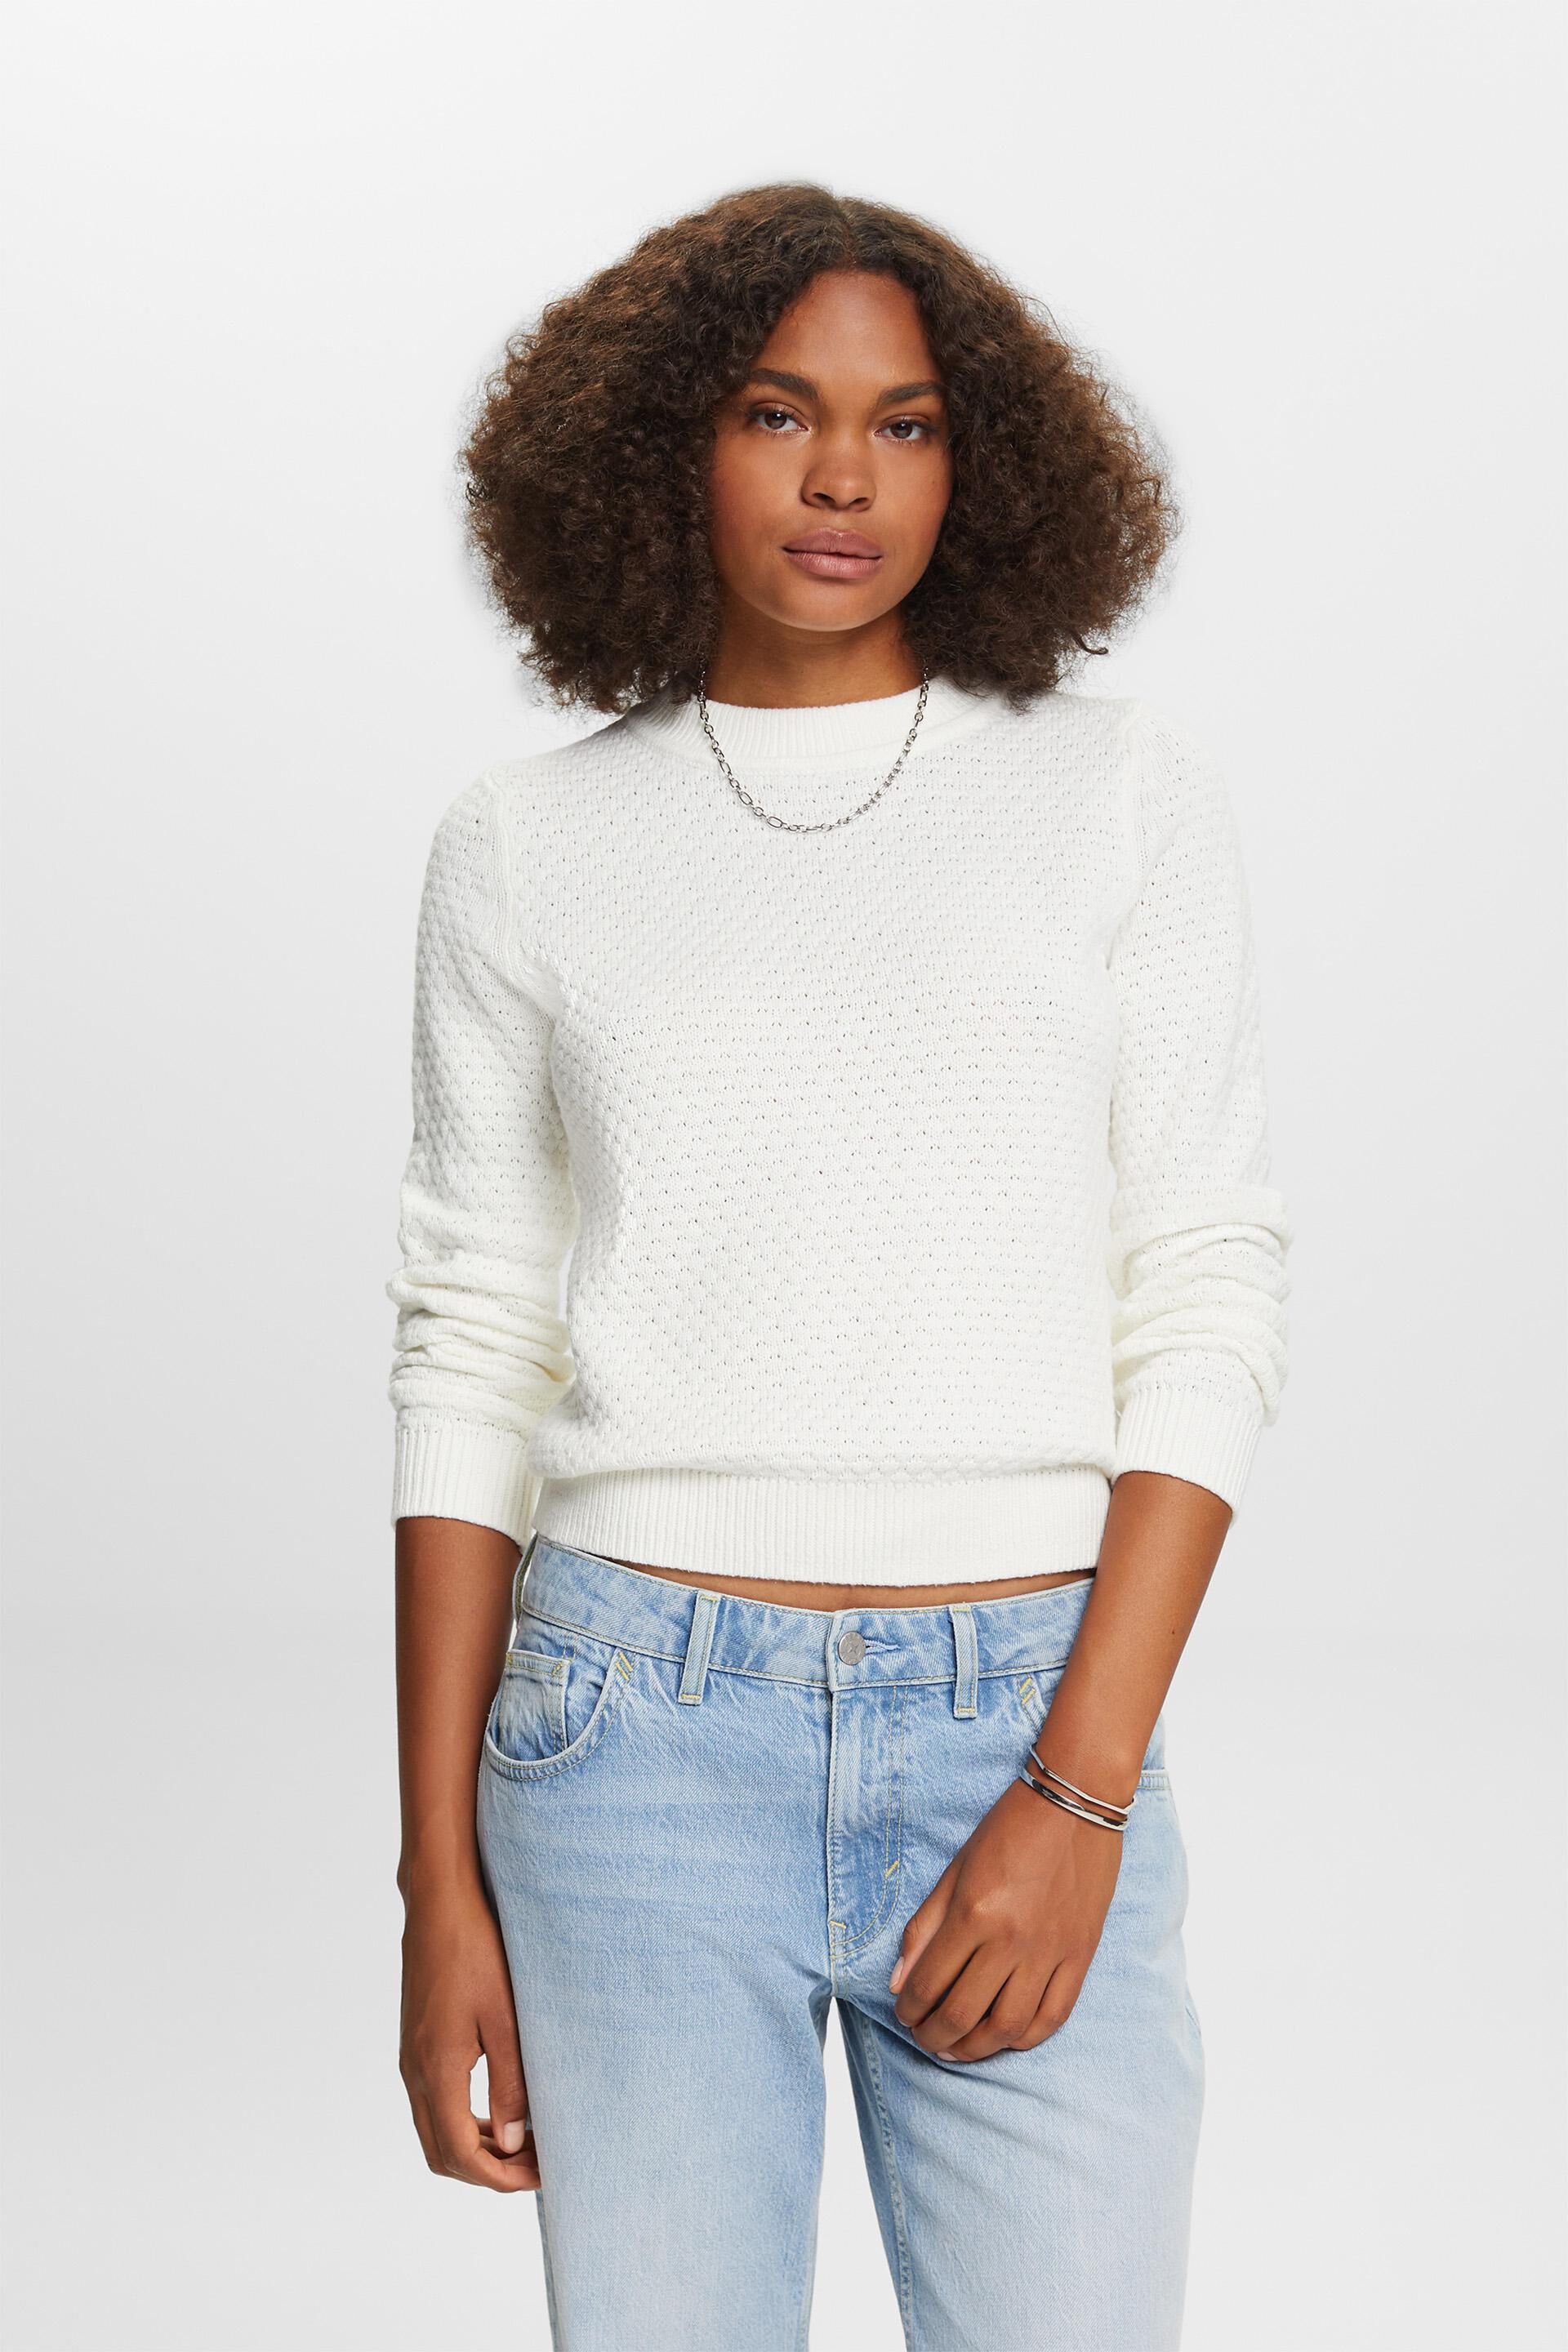 Esprit jumper, cotton Textured blend knit